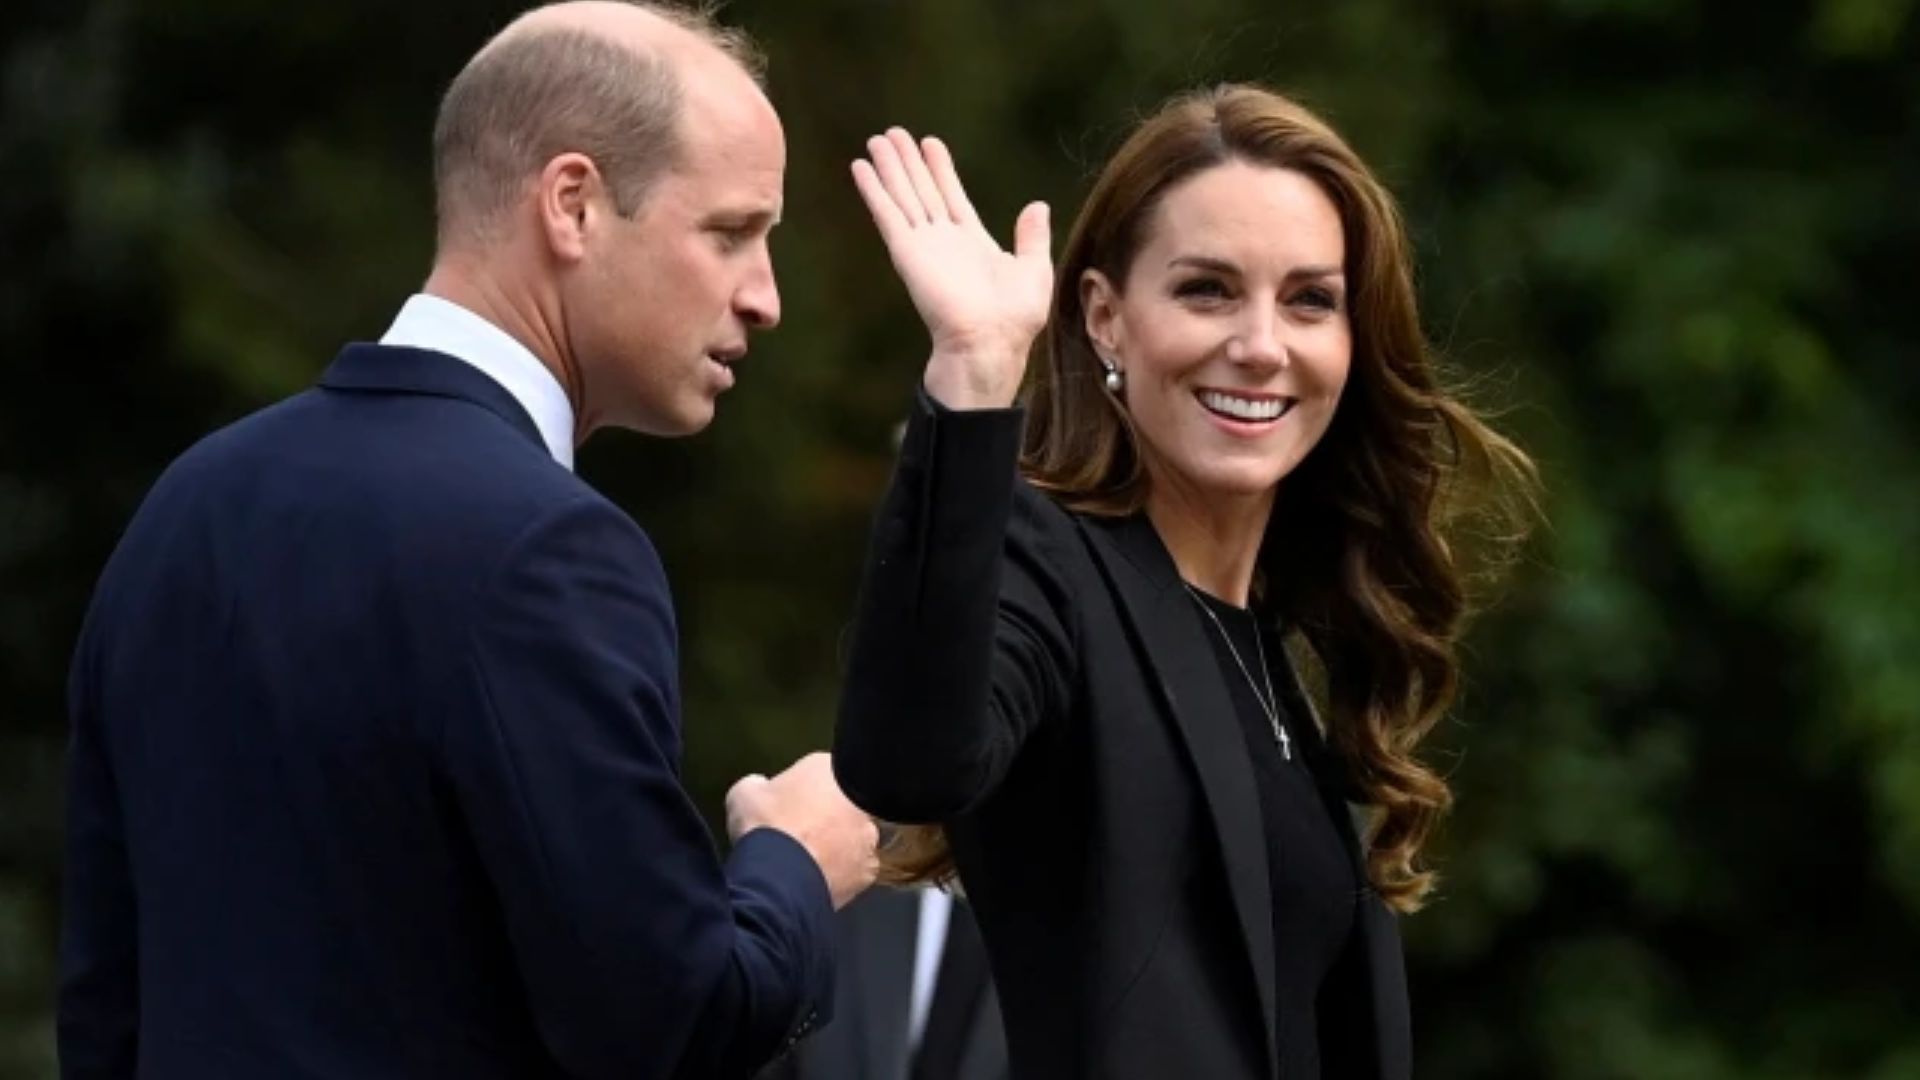 Kate Middleton wears Sovereigns pearl earrings